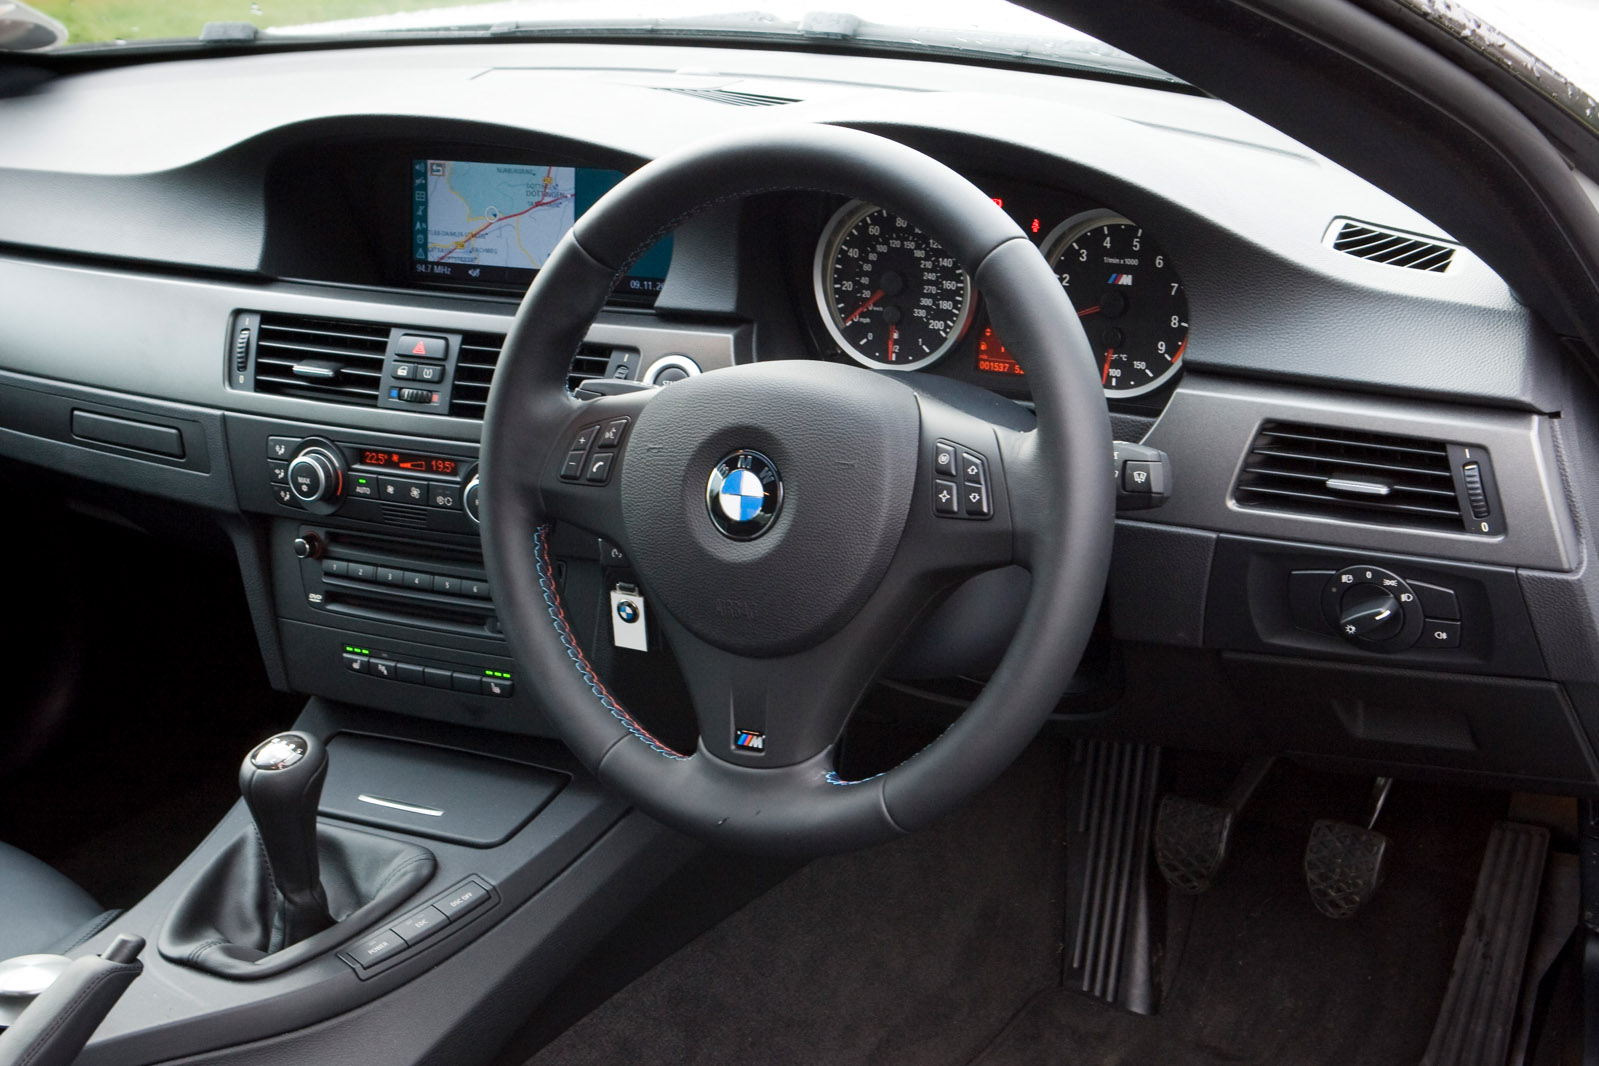 BMW E92 M3 buyer's guide